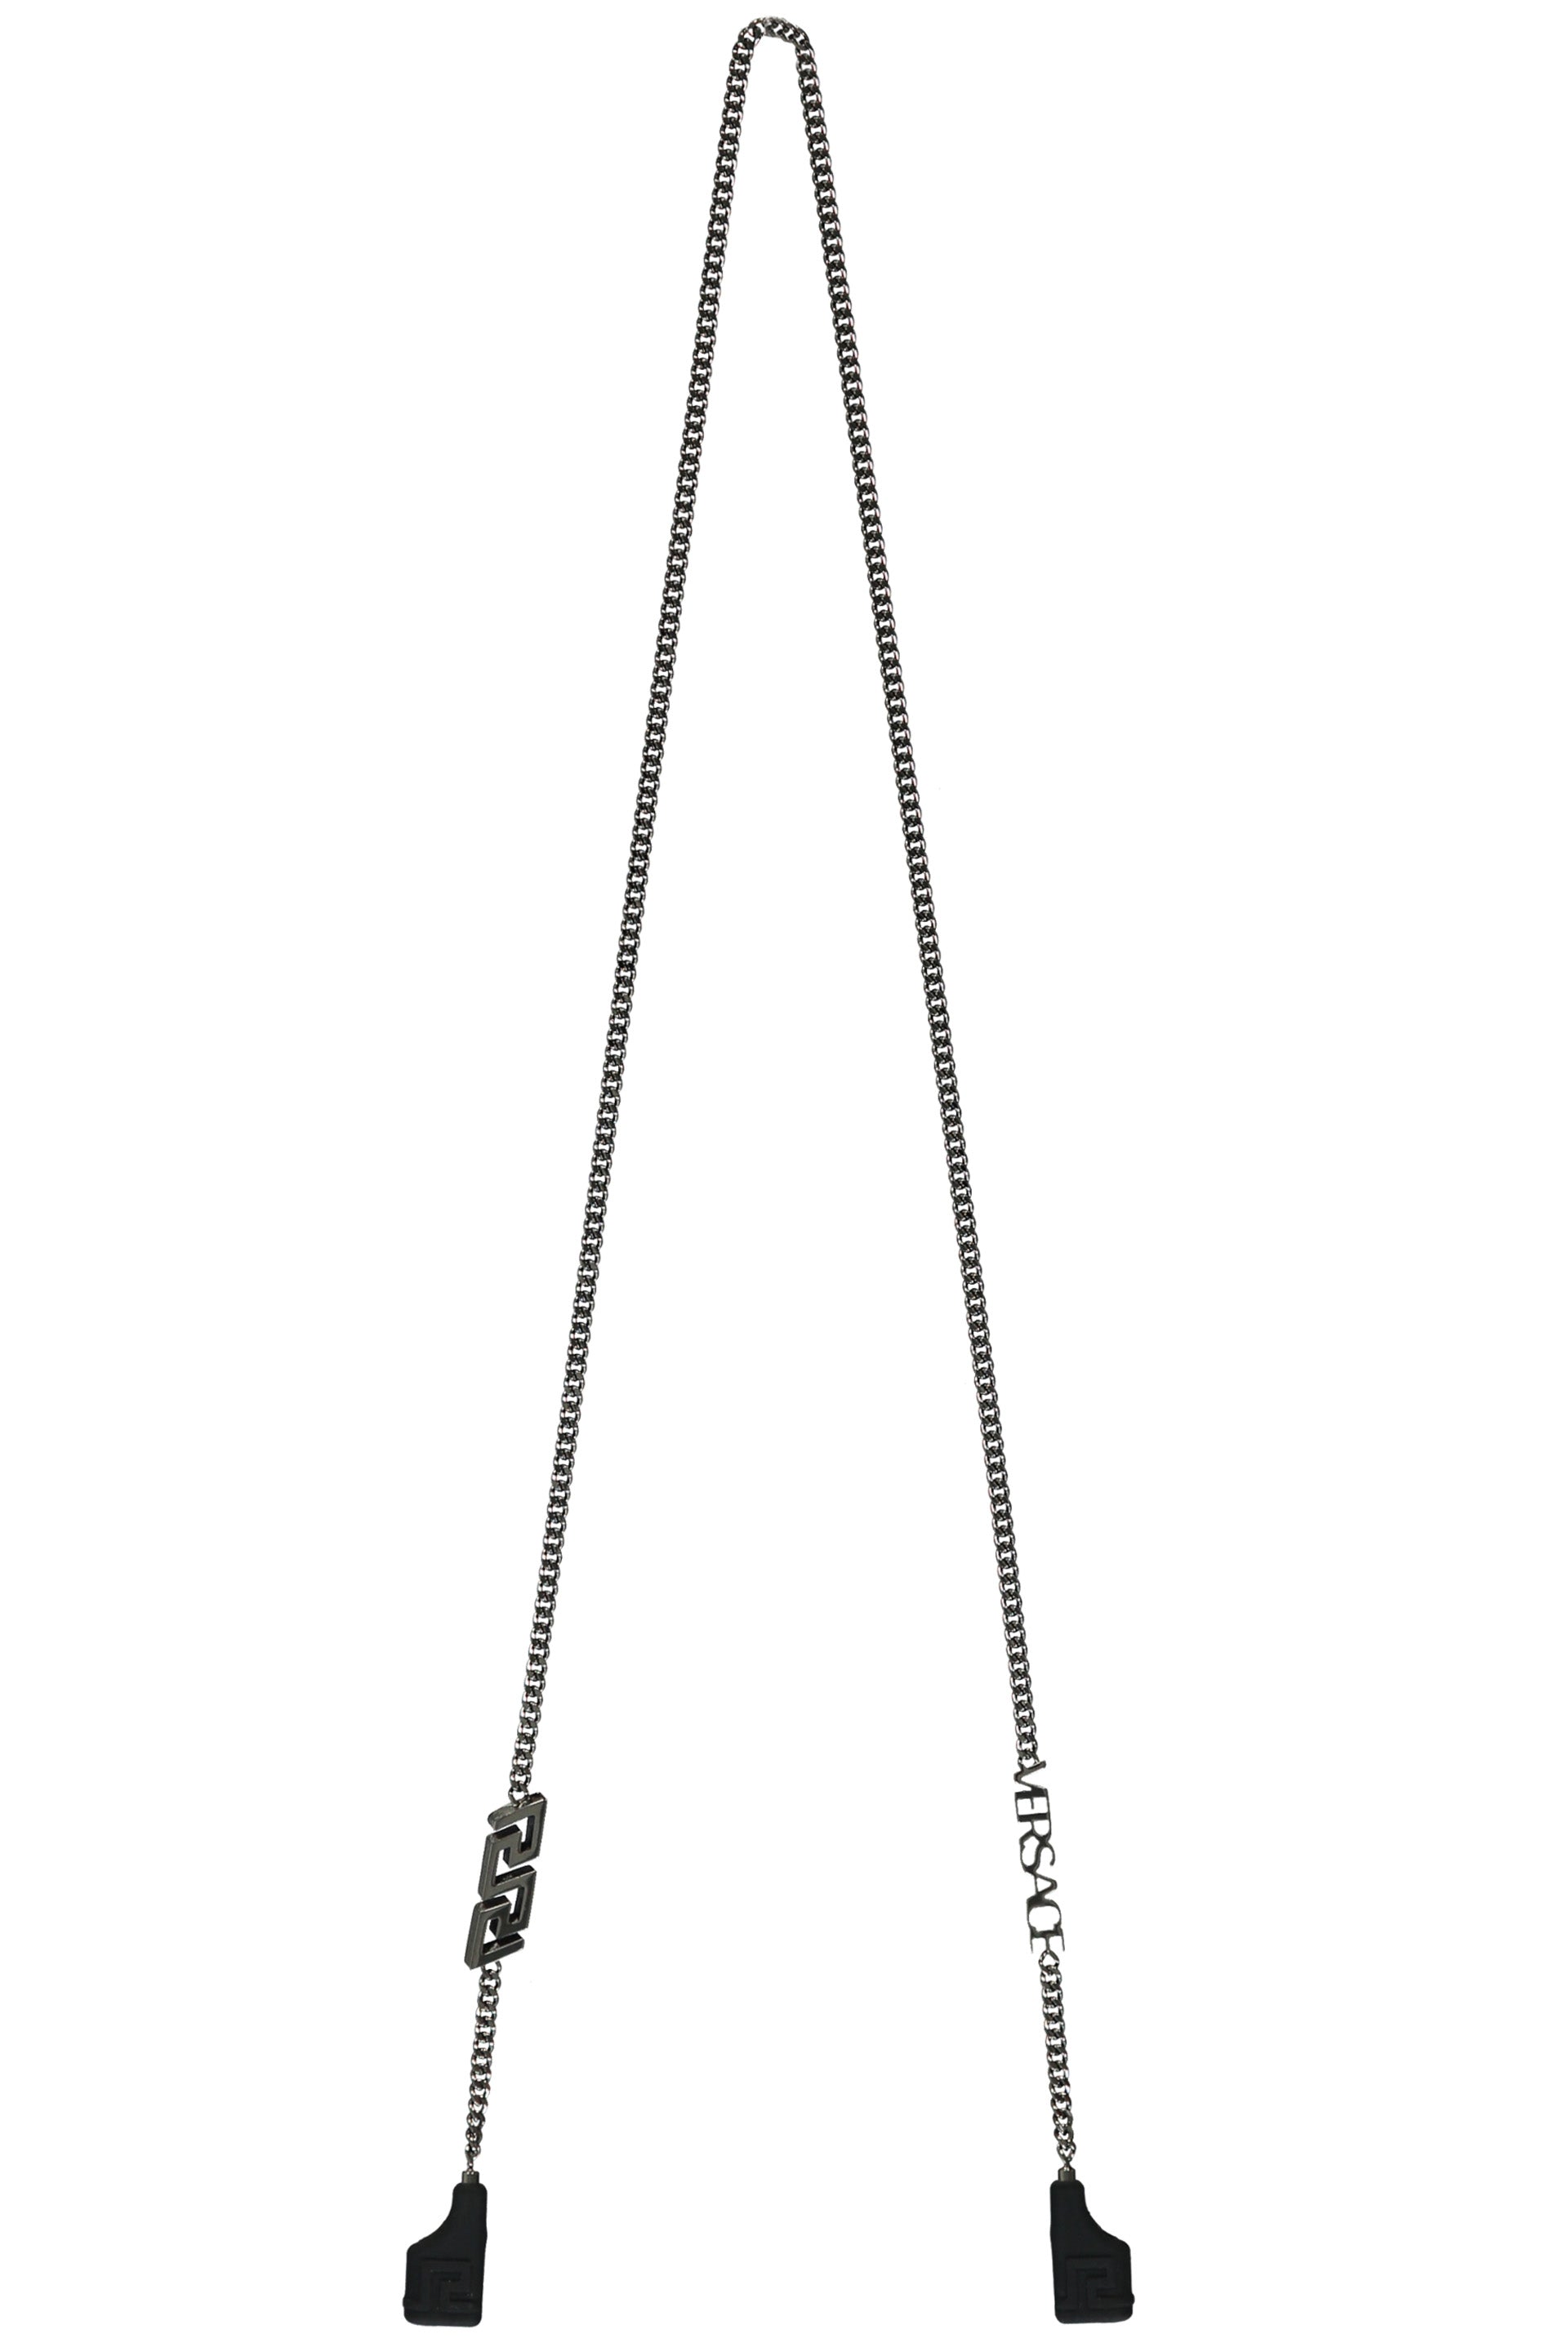 Chain strap for wireless headphones-Versace-OUTLET-SALE-TU-ARCHIVIST